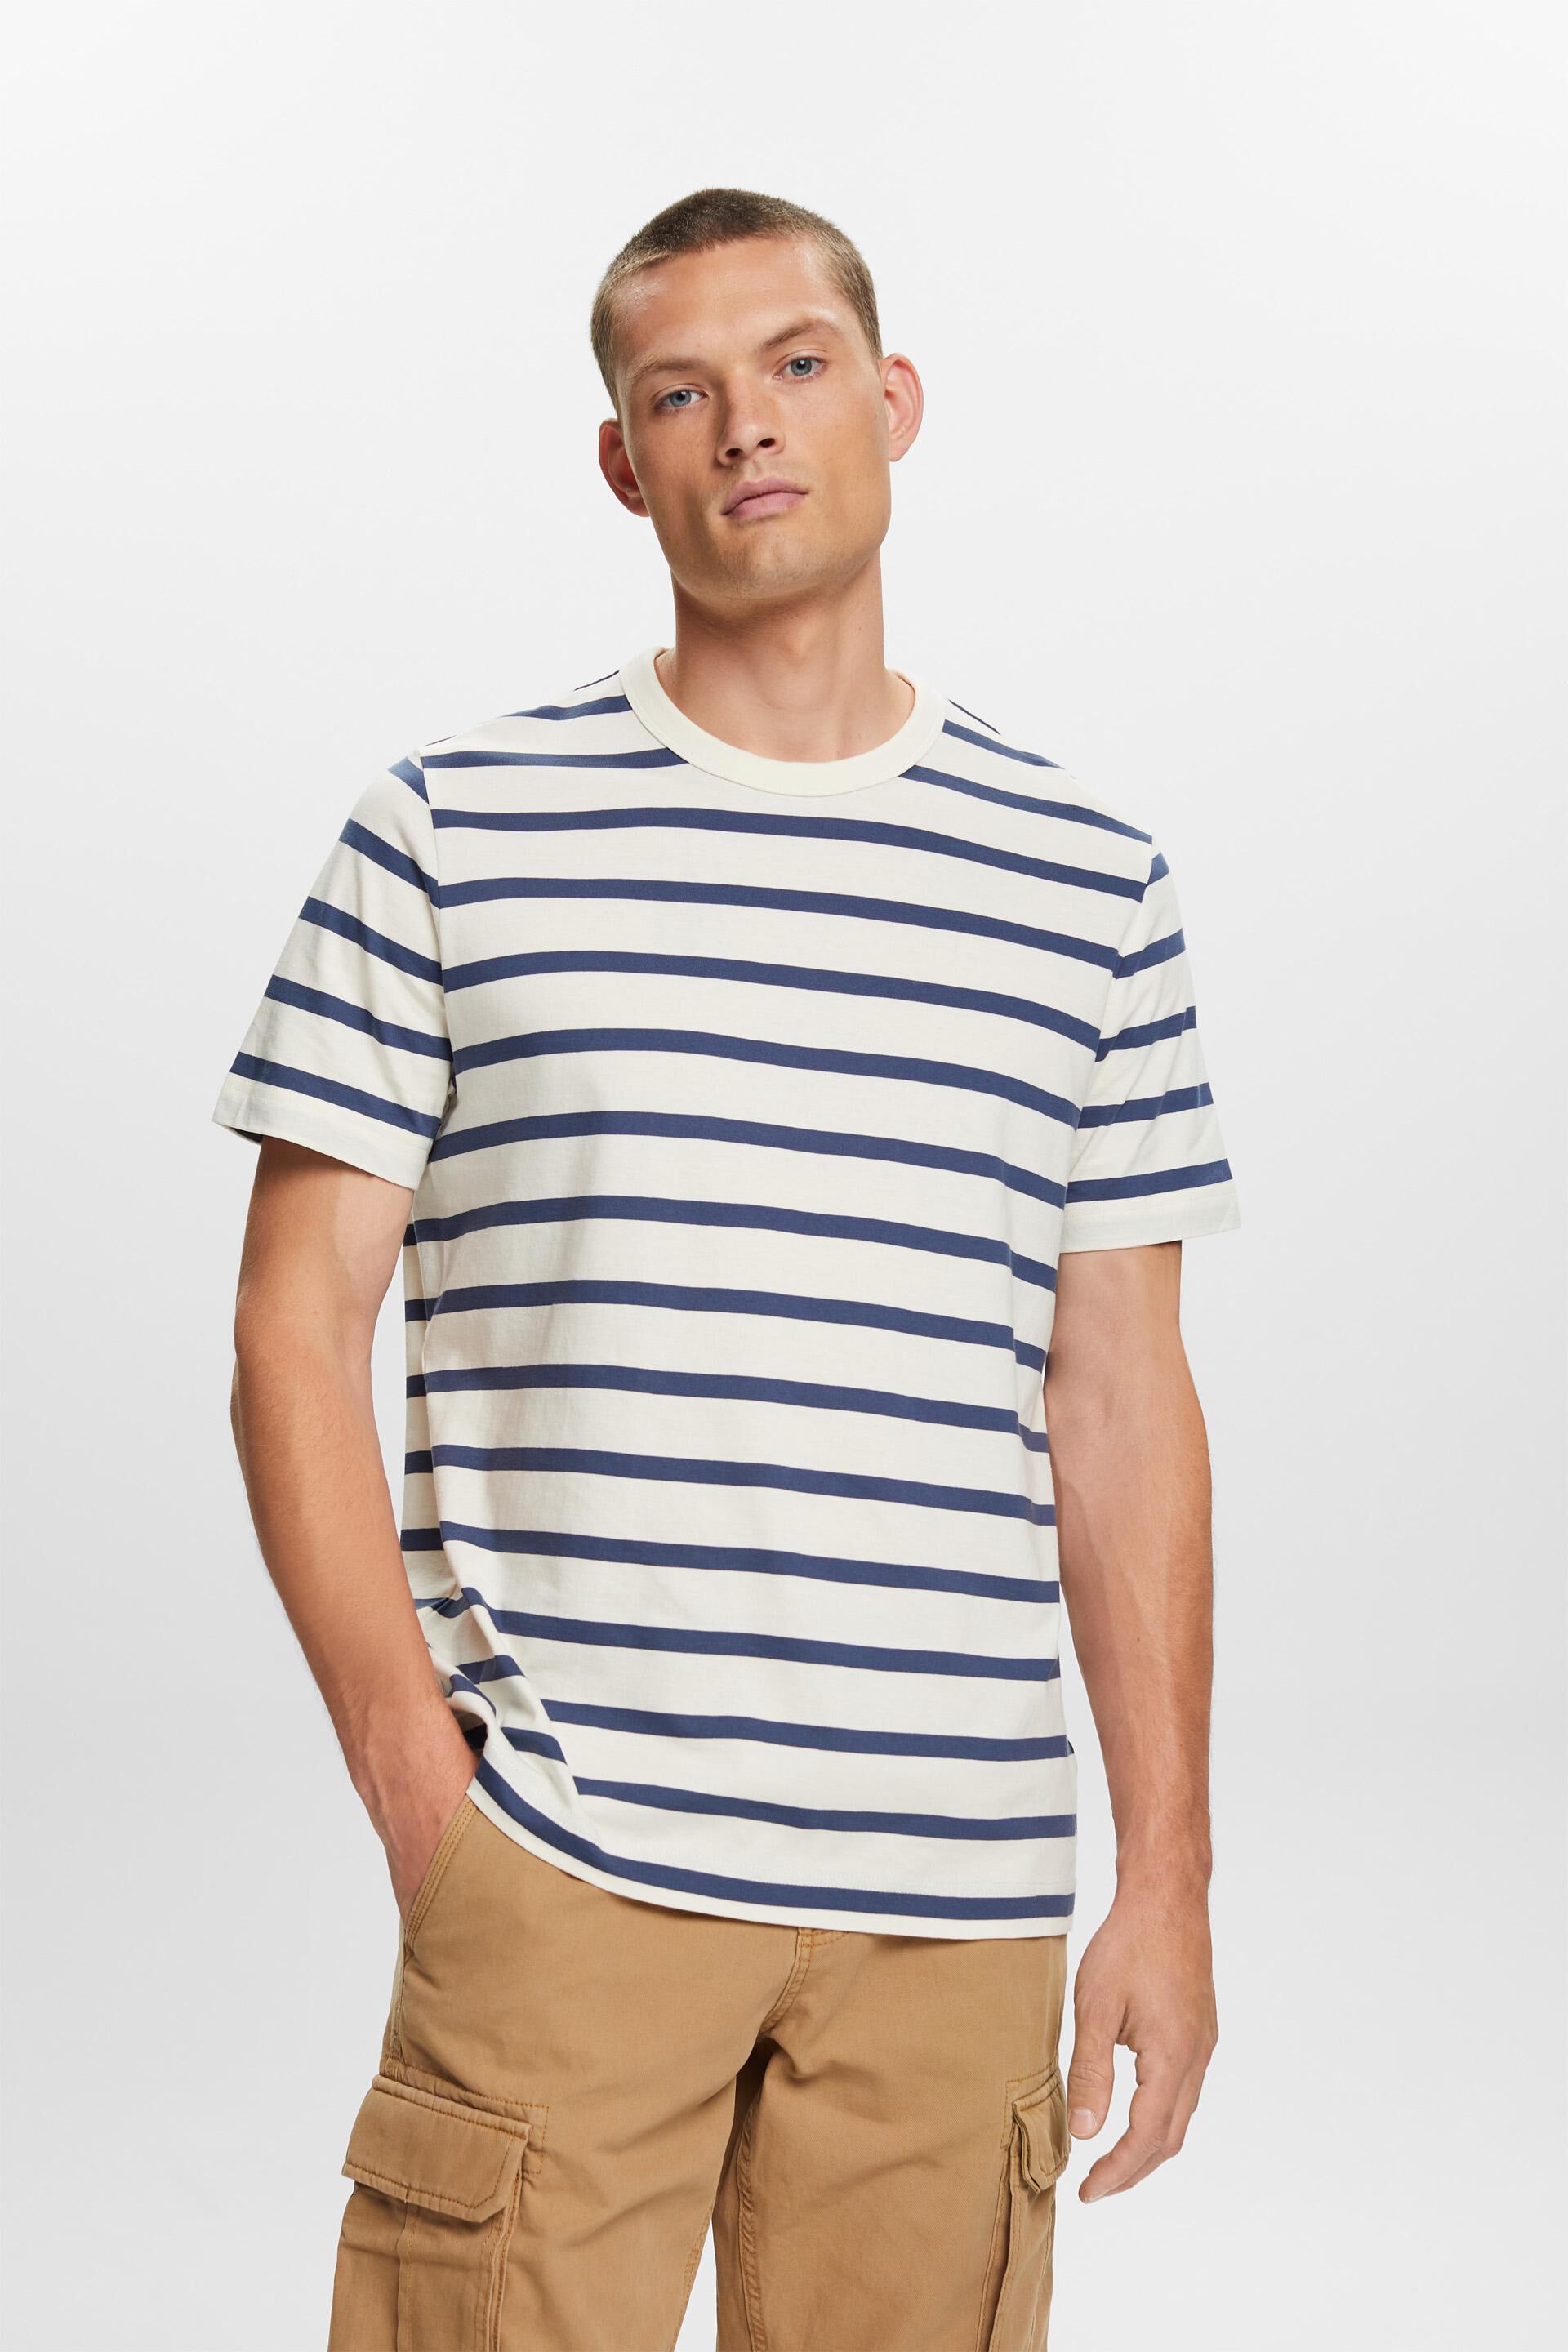 Esprit cotton jersey t-shirt, 100% Striped